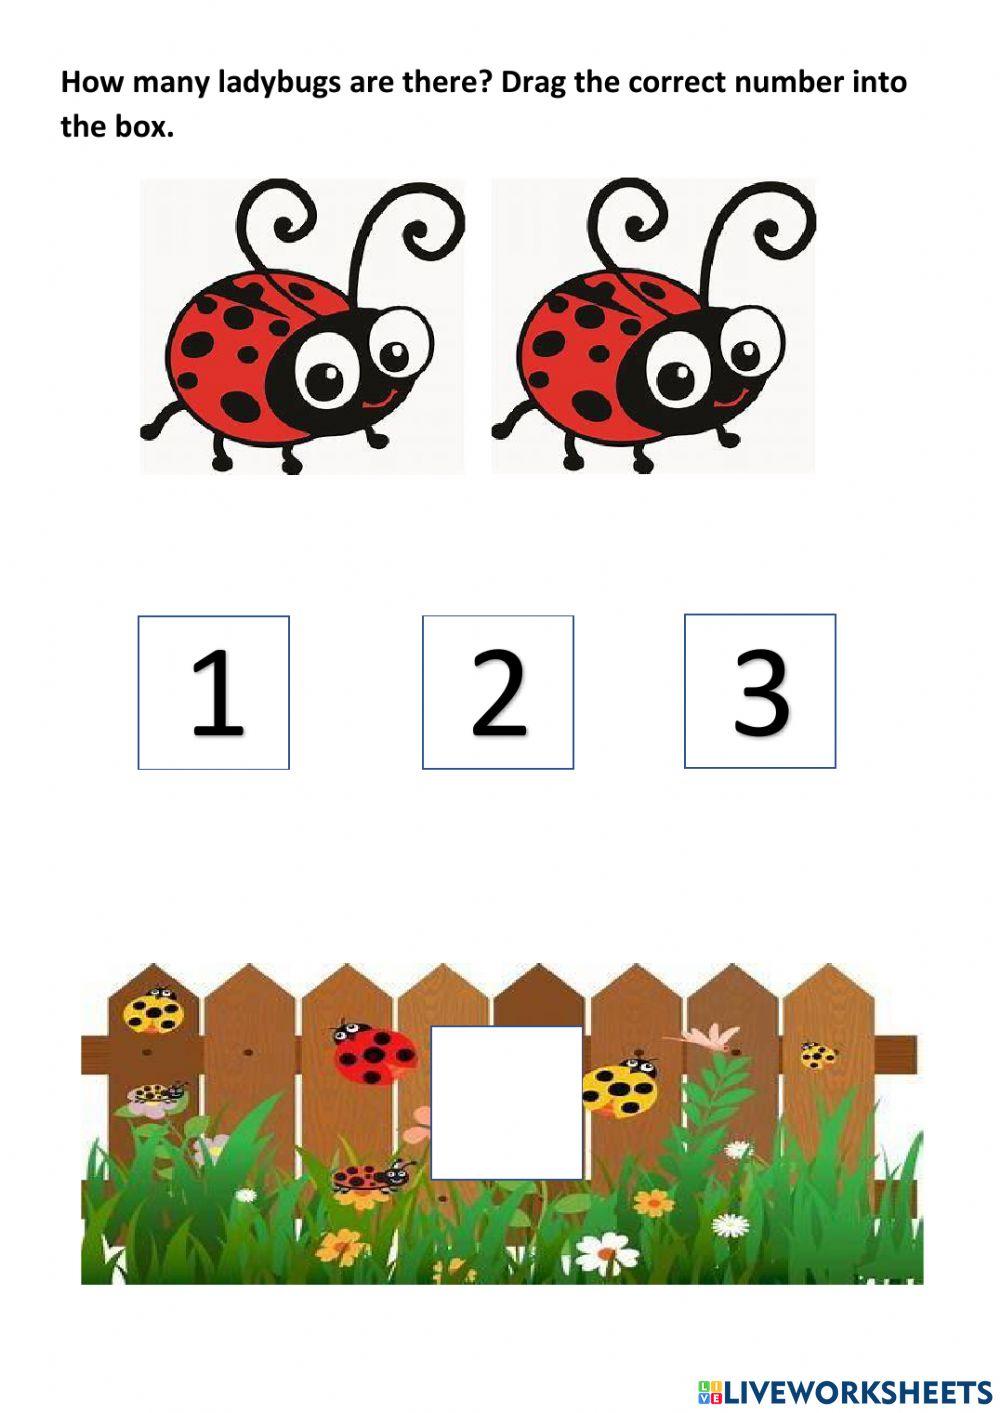 Count the ladybugs